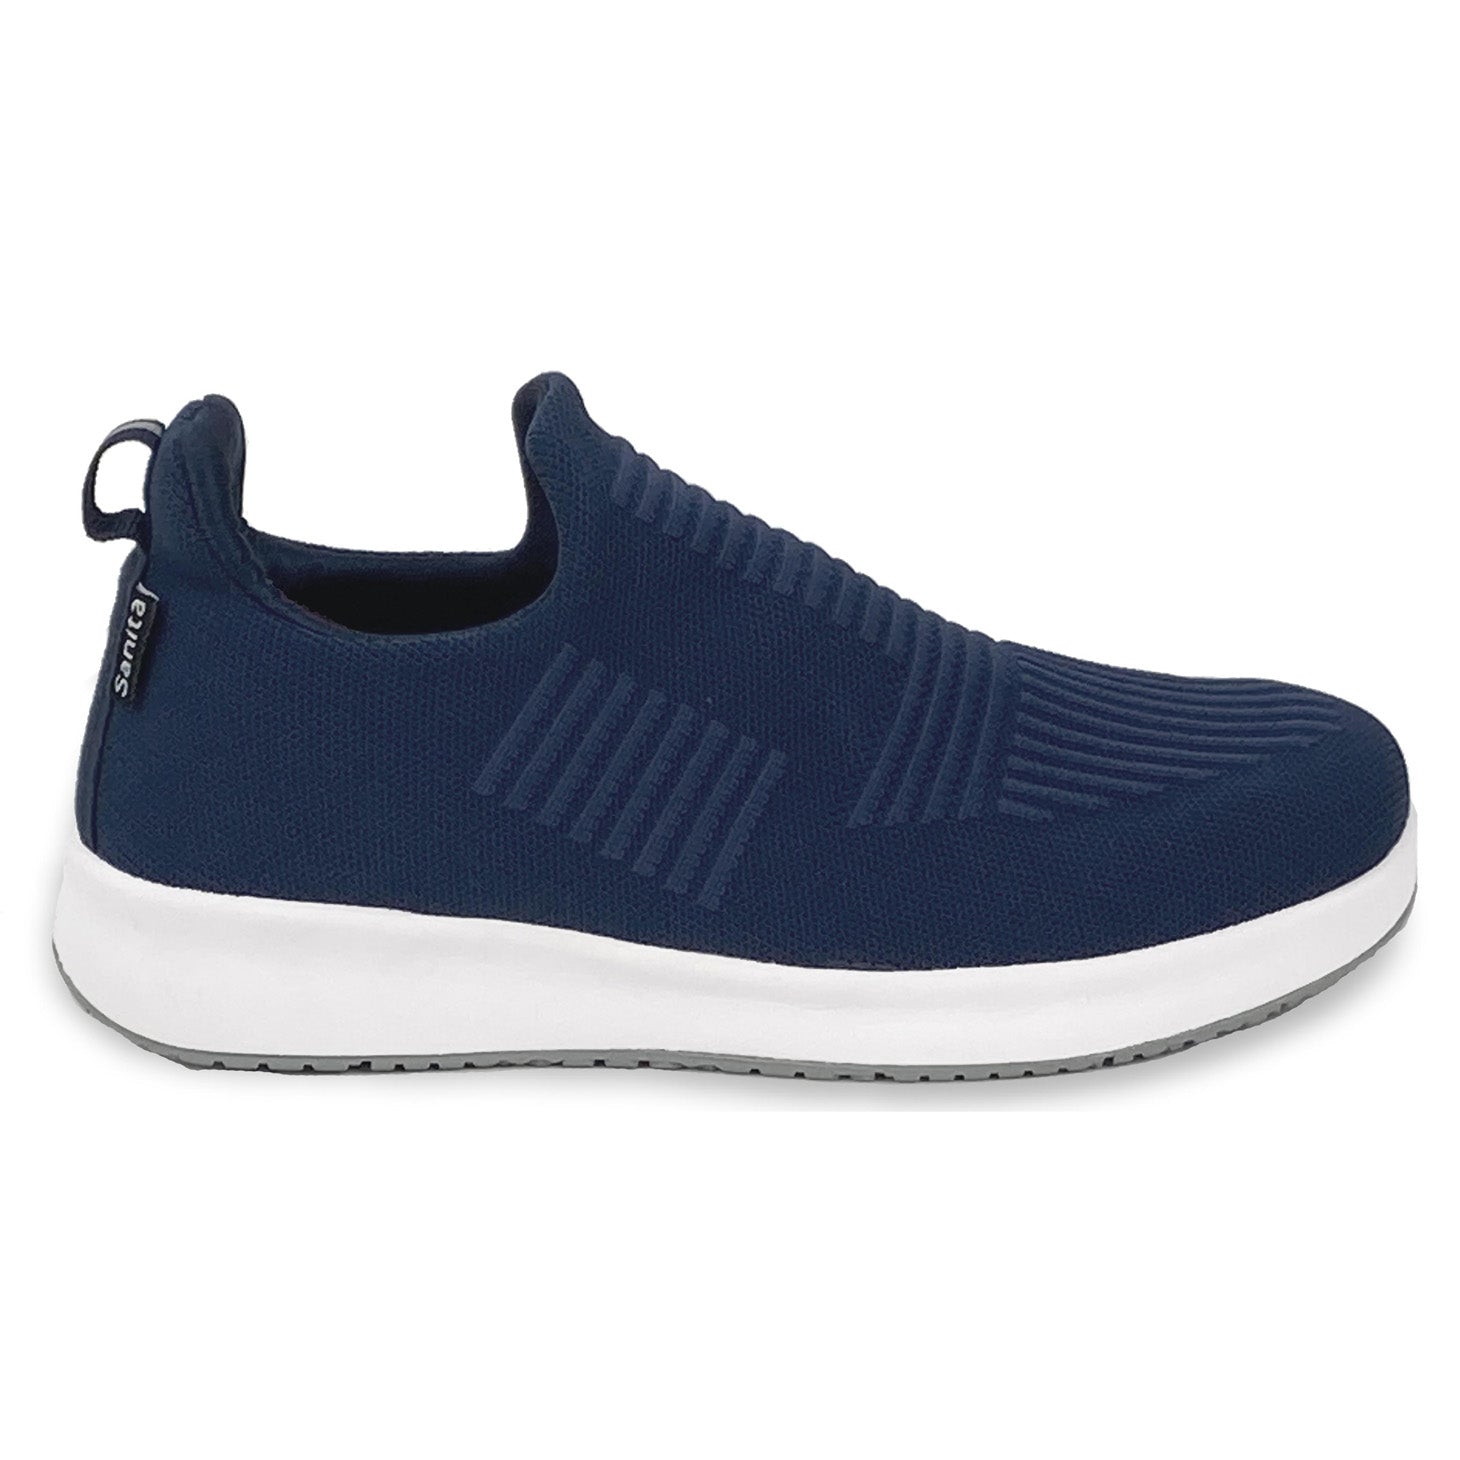 Sanita Trident Unisex in Blue - Avail. Fall '22 Sneaker